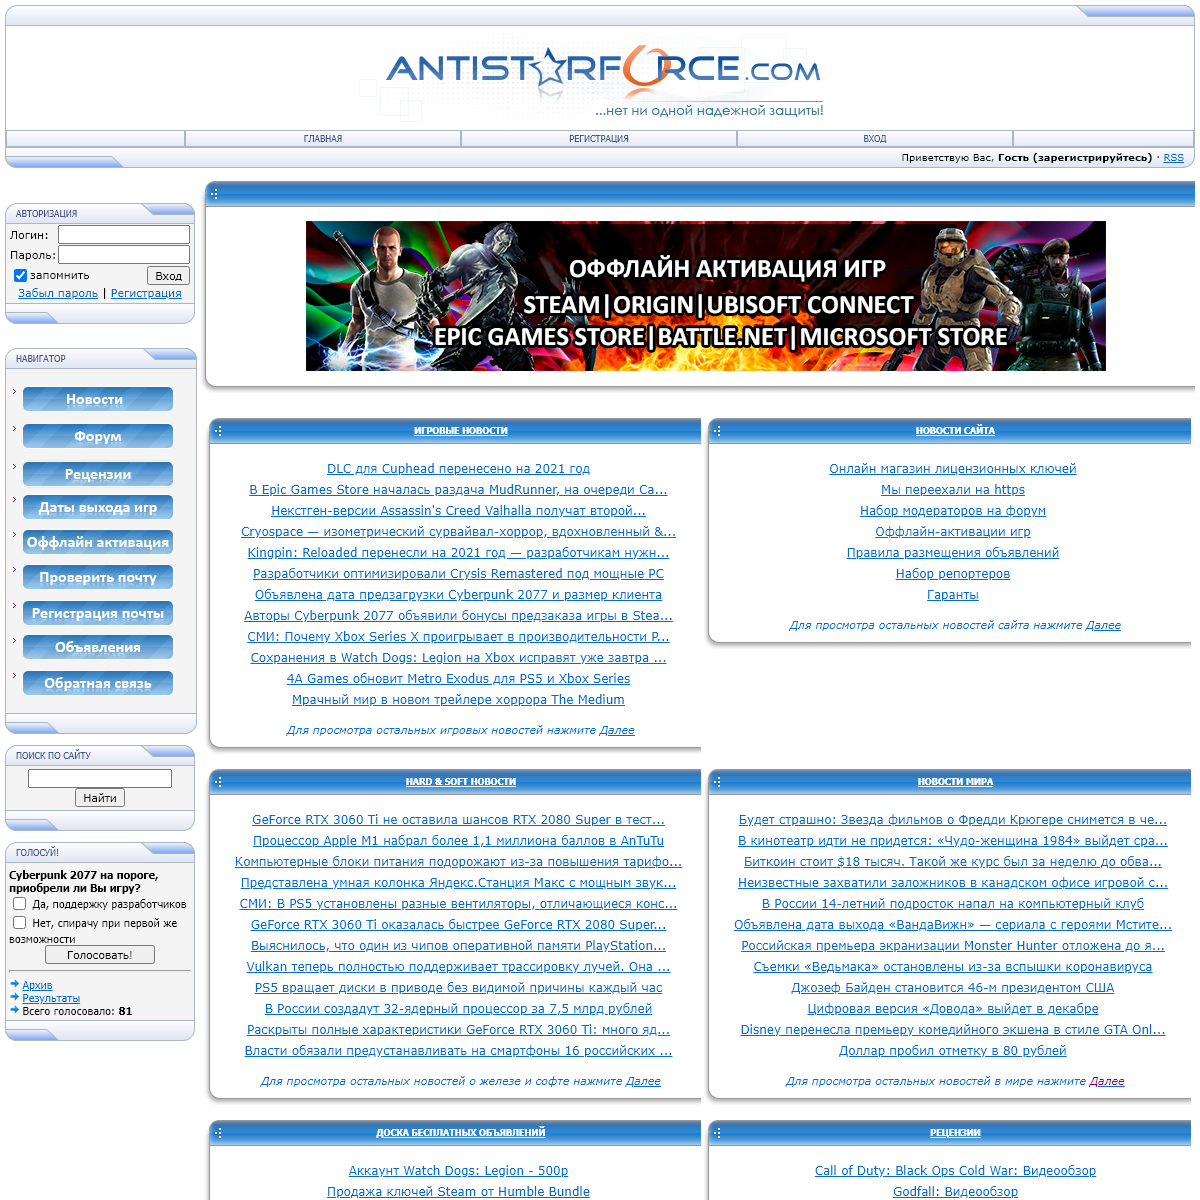 A complete backup of antistarforce.com